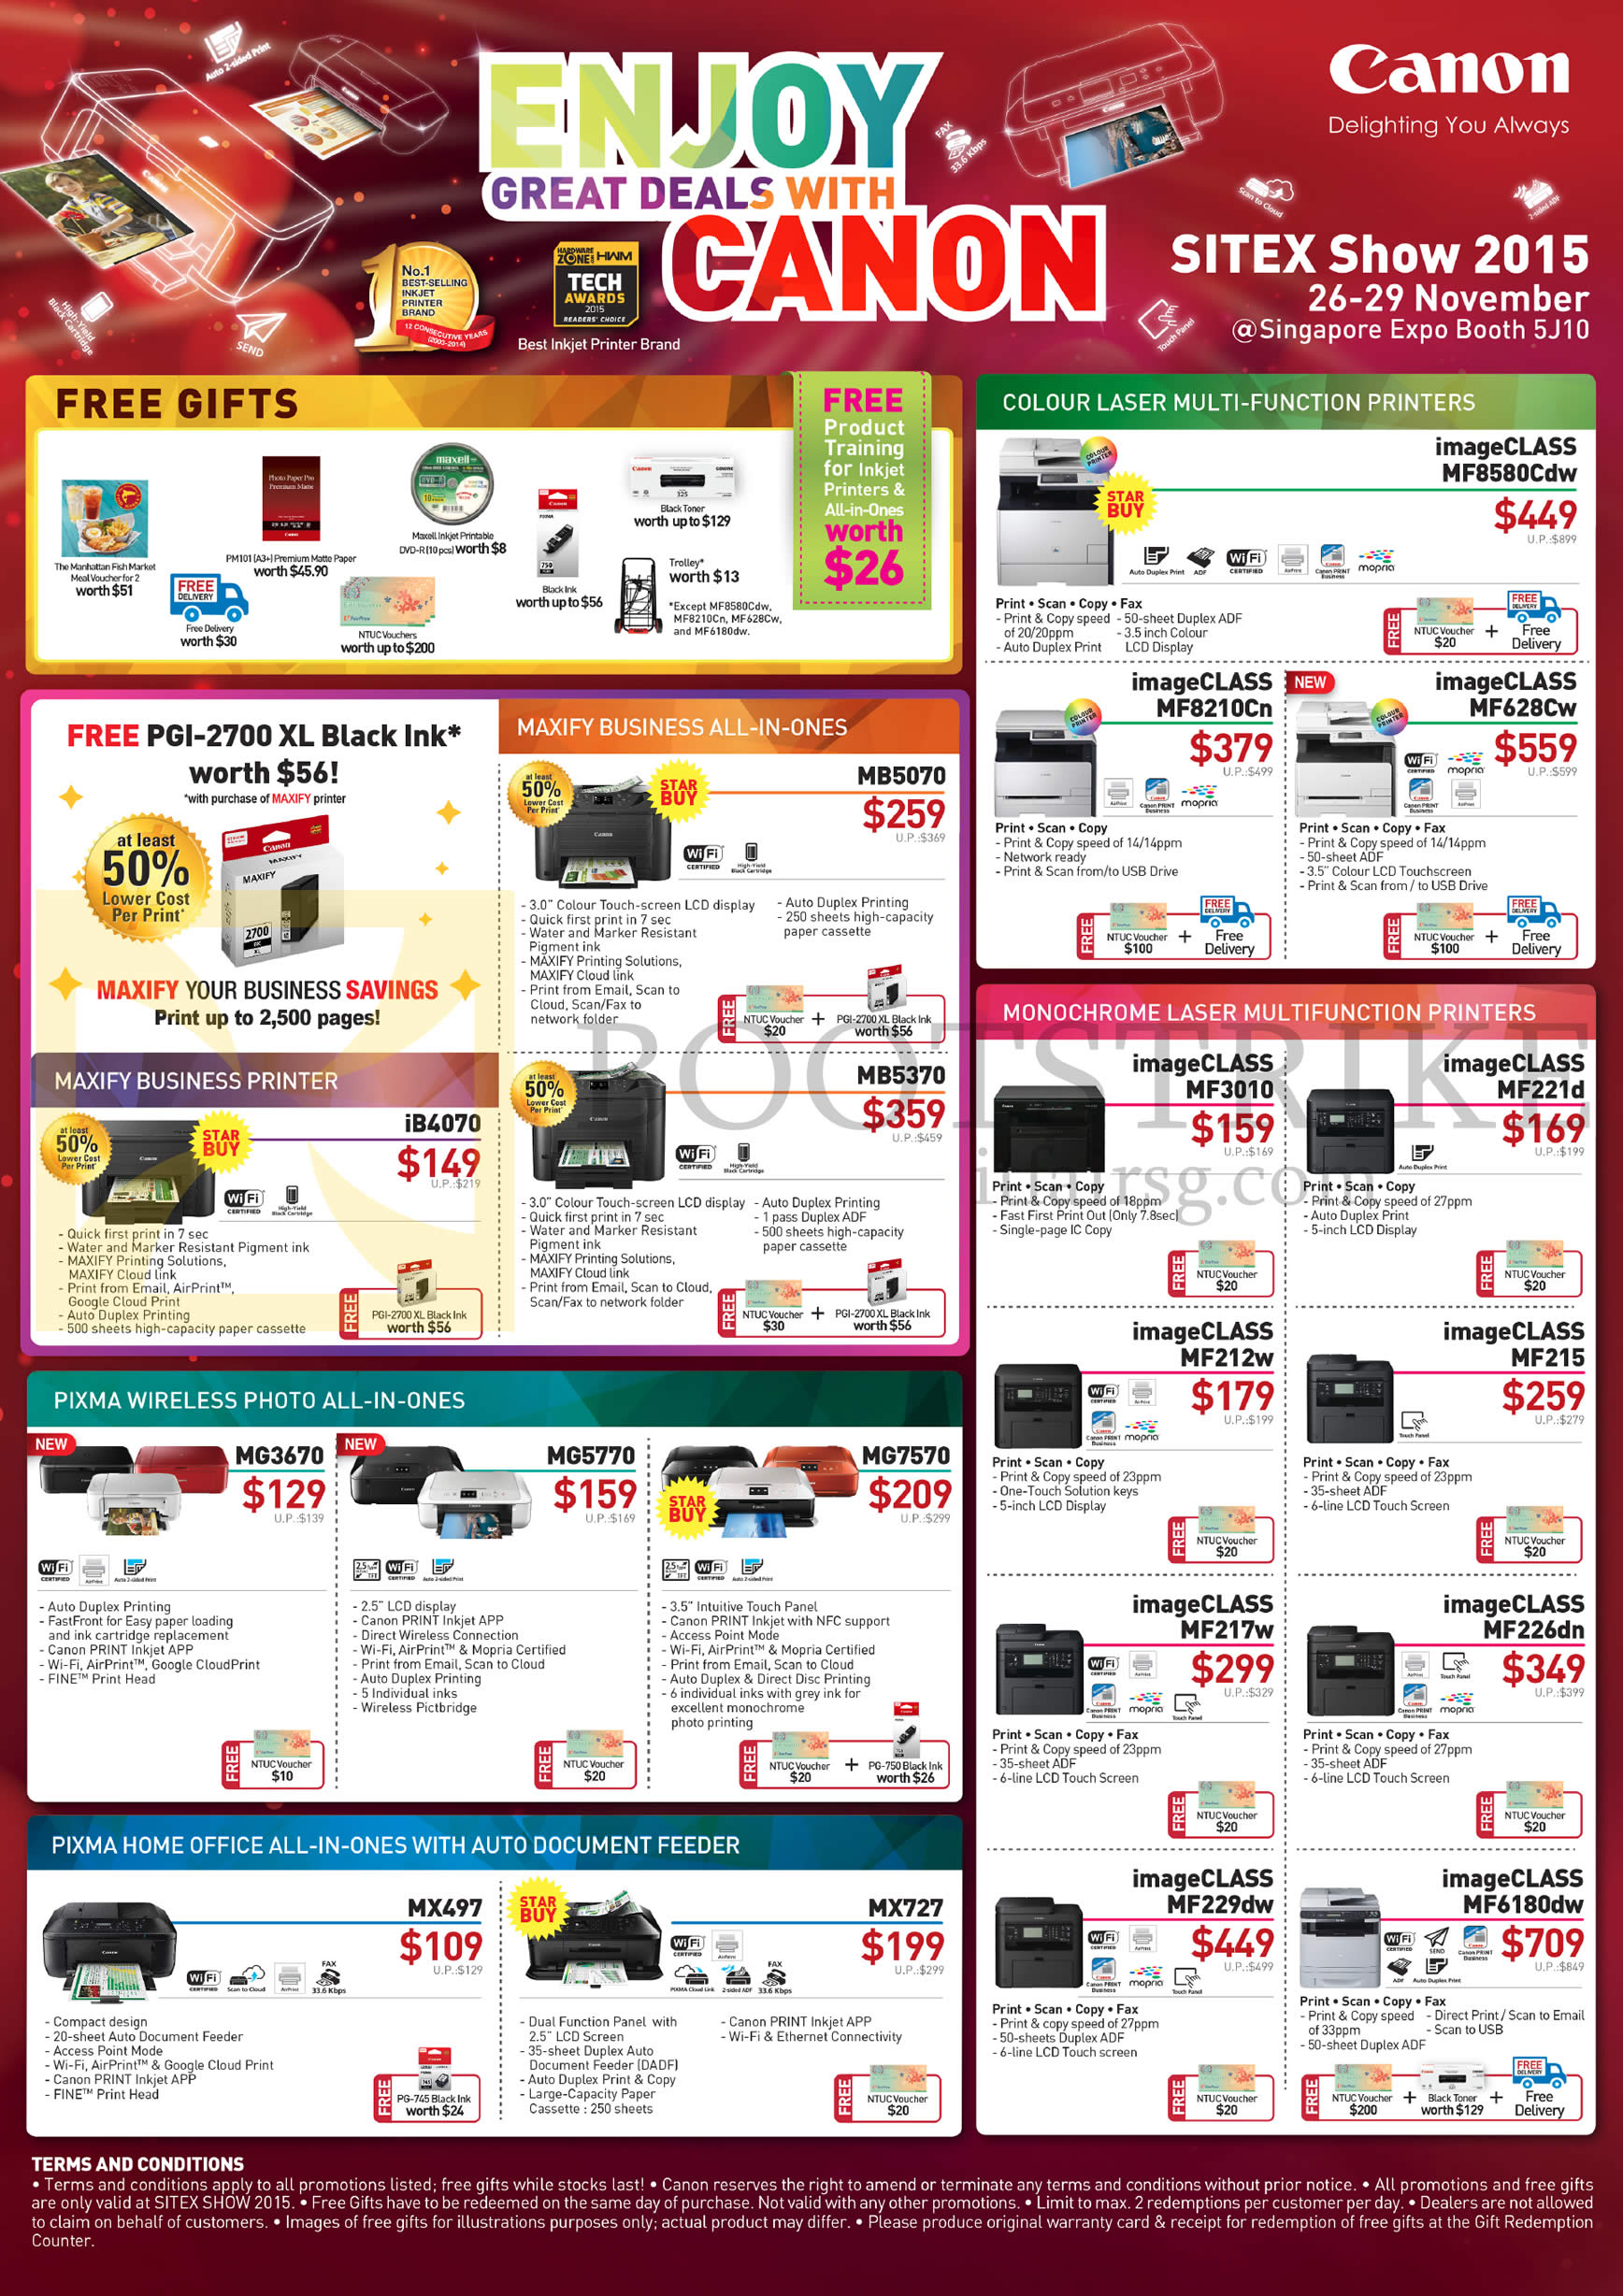 SITEX 2015 price list image brochure of Canon Printers Scanners, MG2570S 2970, IP2870S 7270 110, IX6870, ImageCLASS LBP6030w 6030 6230dn 7110CW 7018C 7100Cn, IP8770, PRO-100 1 10, LiDE 120 220 CS9000F Mark II, DR-F120, P208II